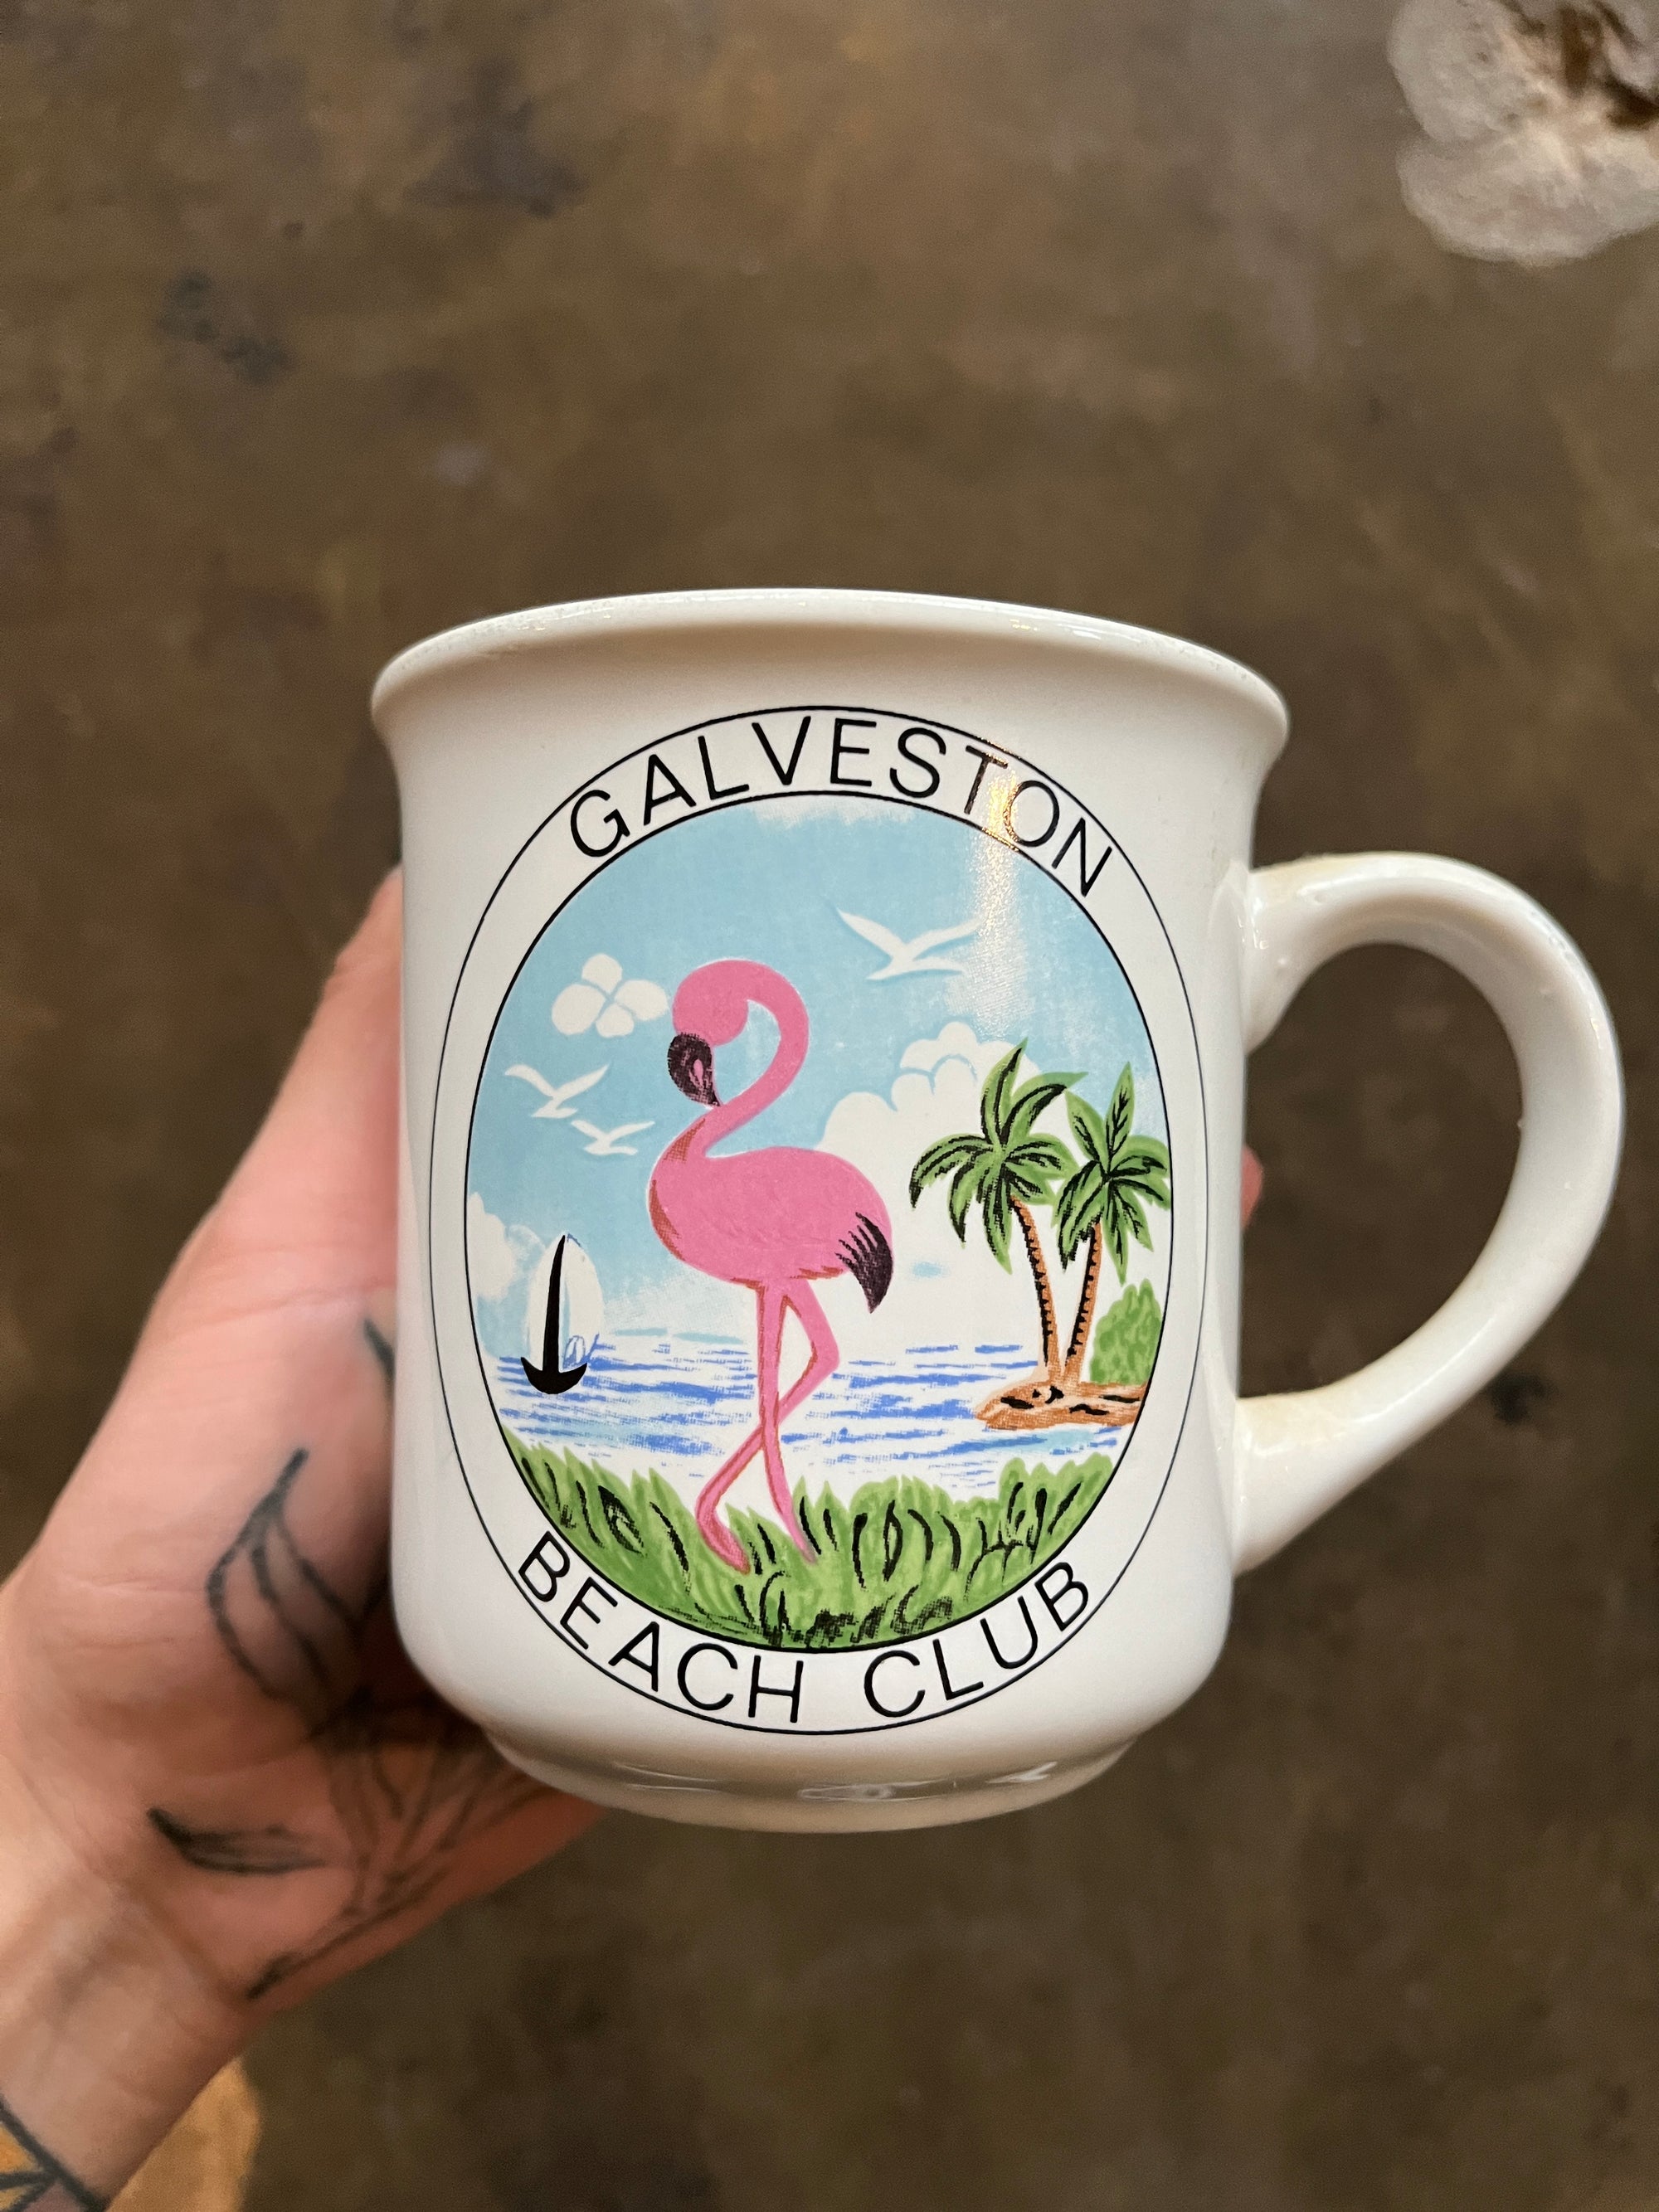 Galveston Beach Club Ceramic Mug